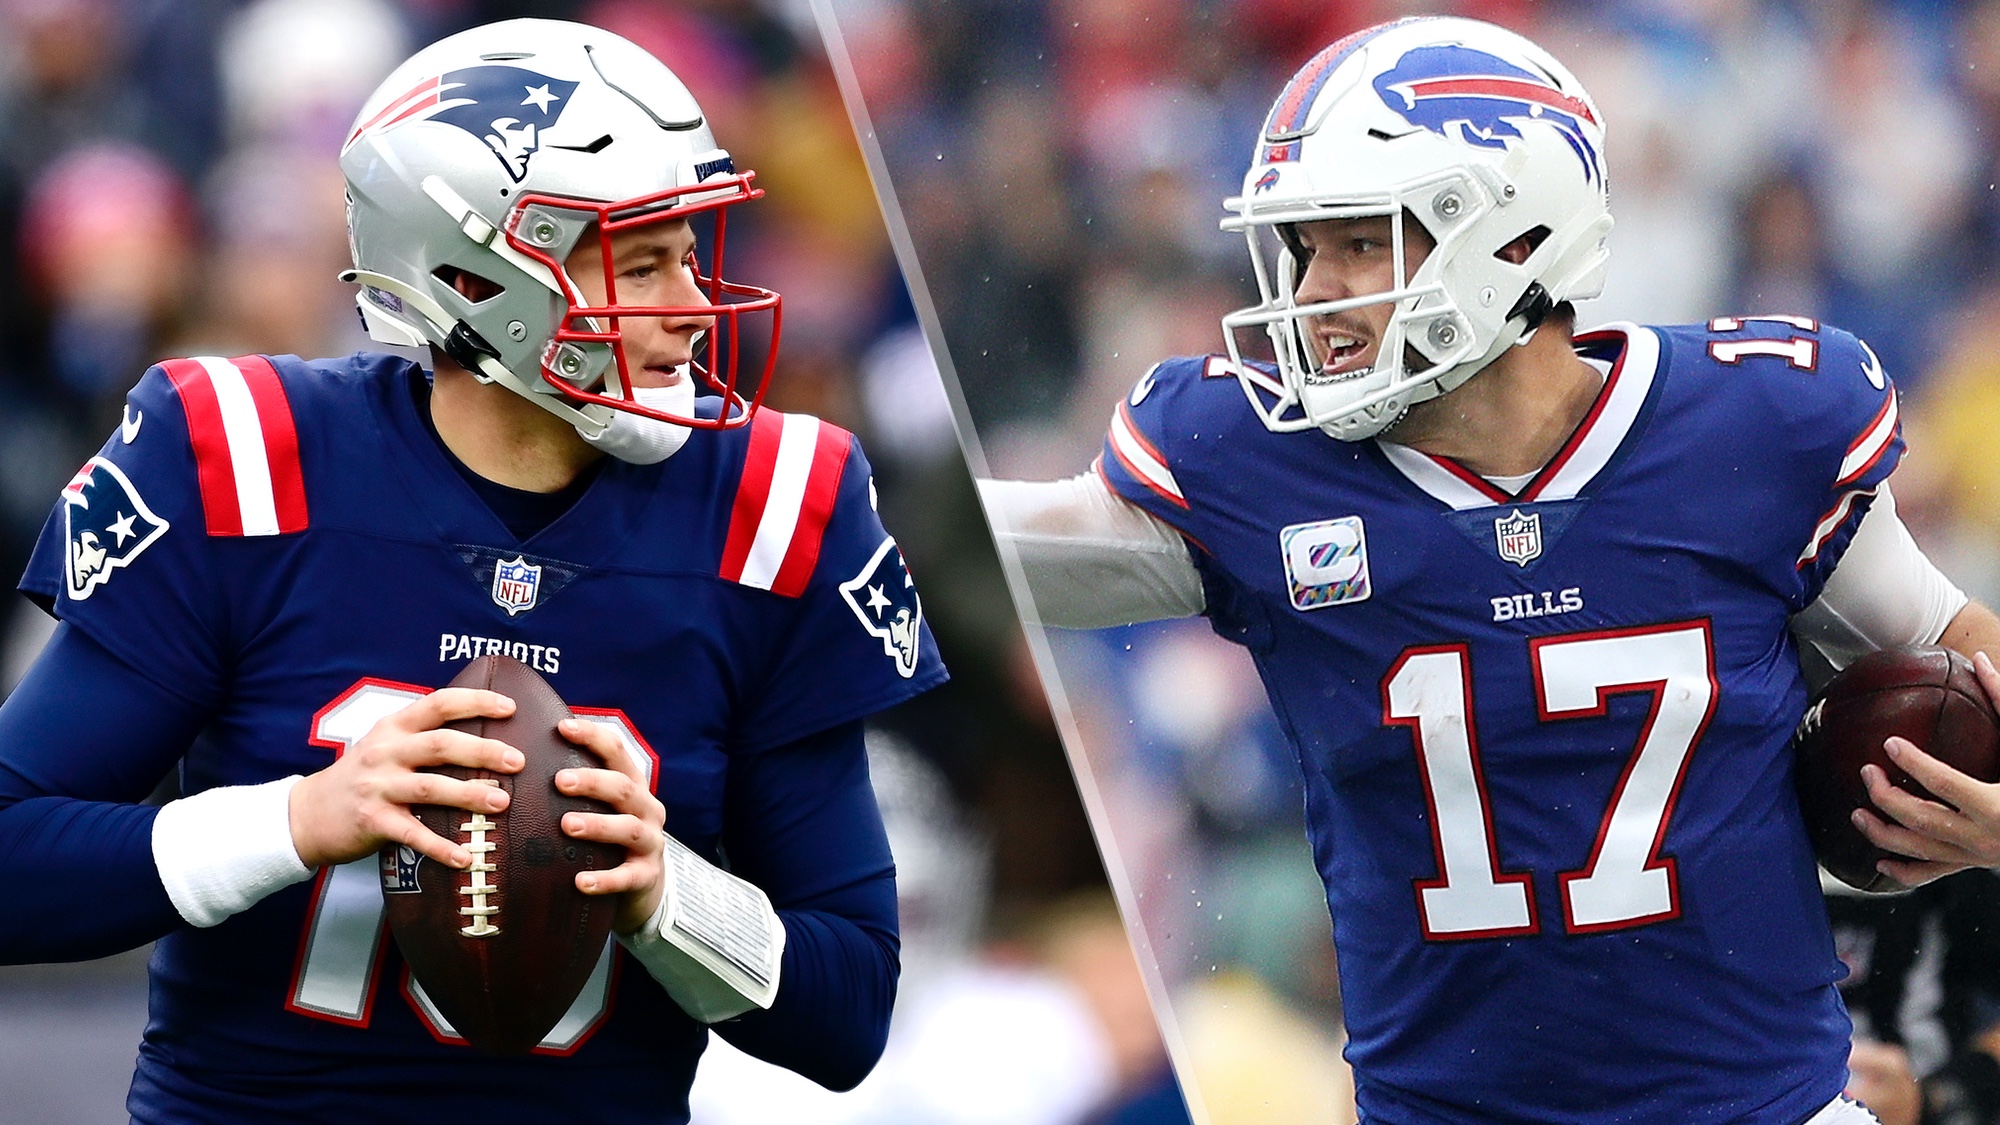 Patriots vs Bills live stream is tonight: How to watch Monday